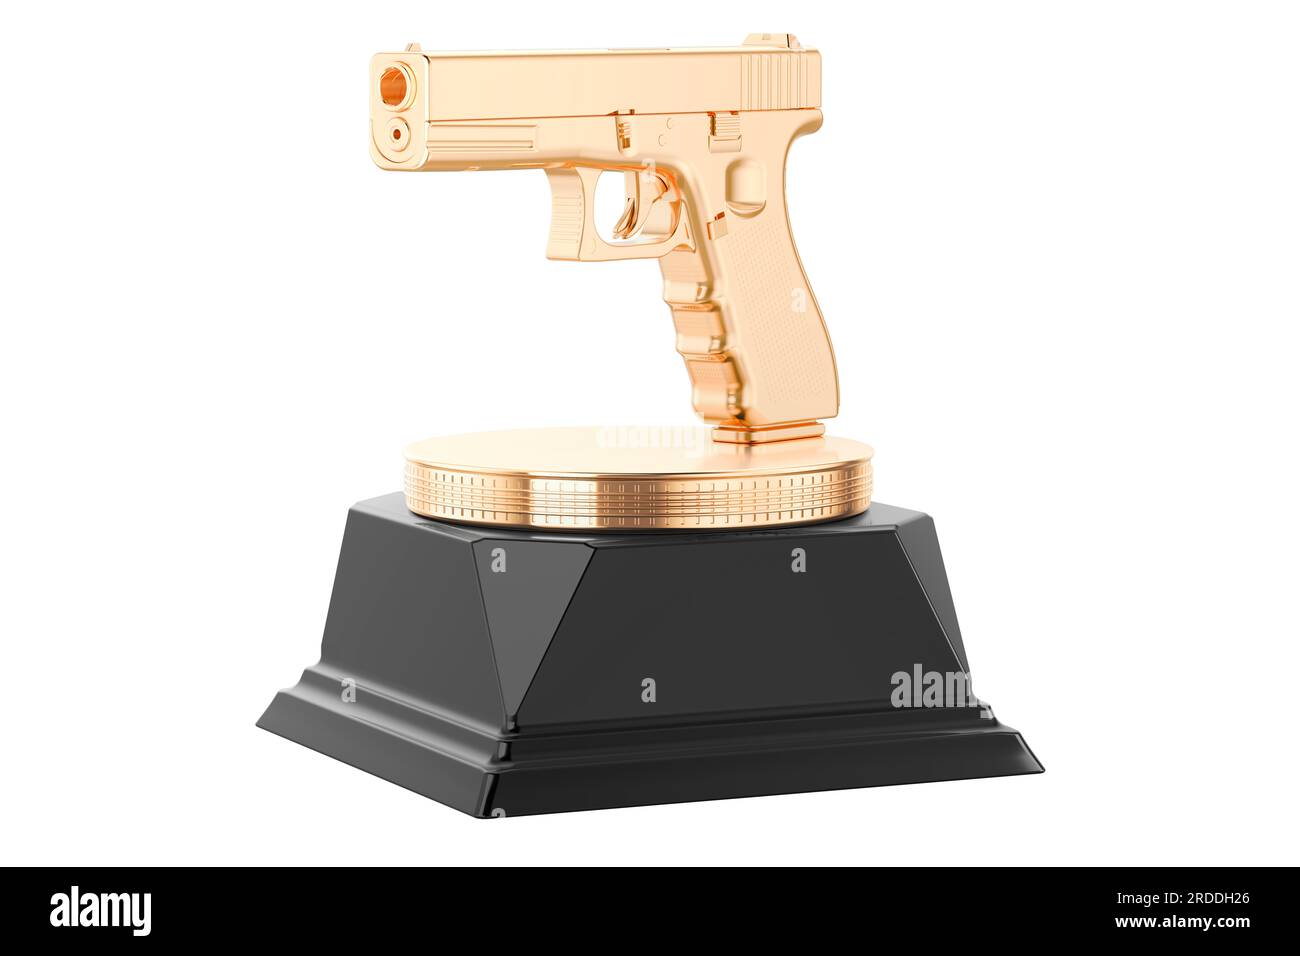 Golden Gun Award Trophy Pedestal. 3d Rendering isolated on white background Stock Photo